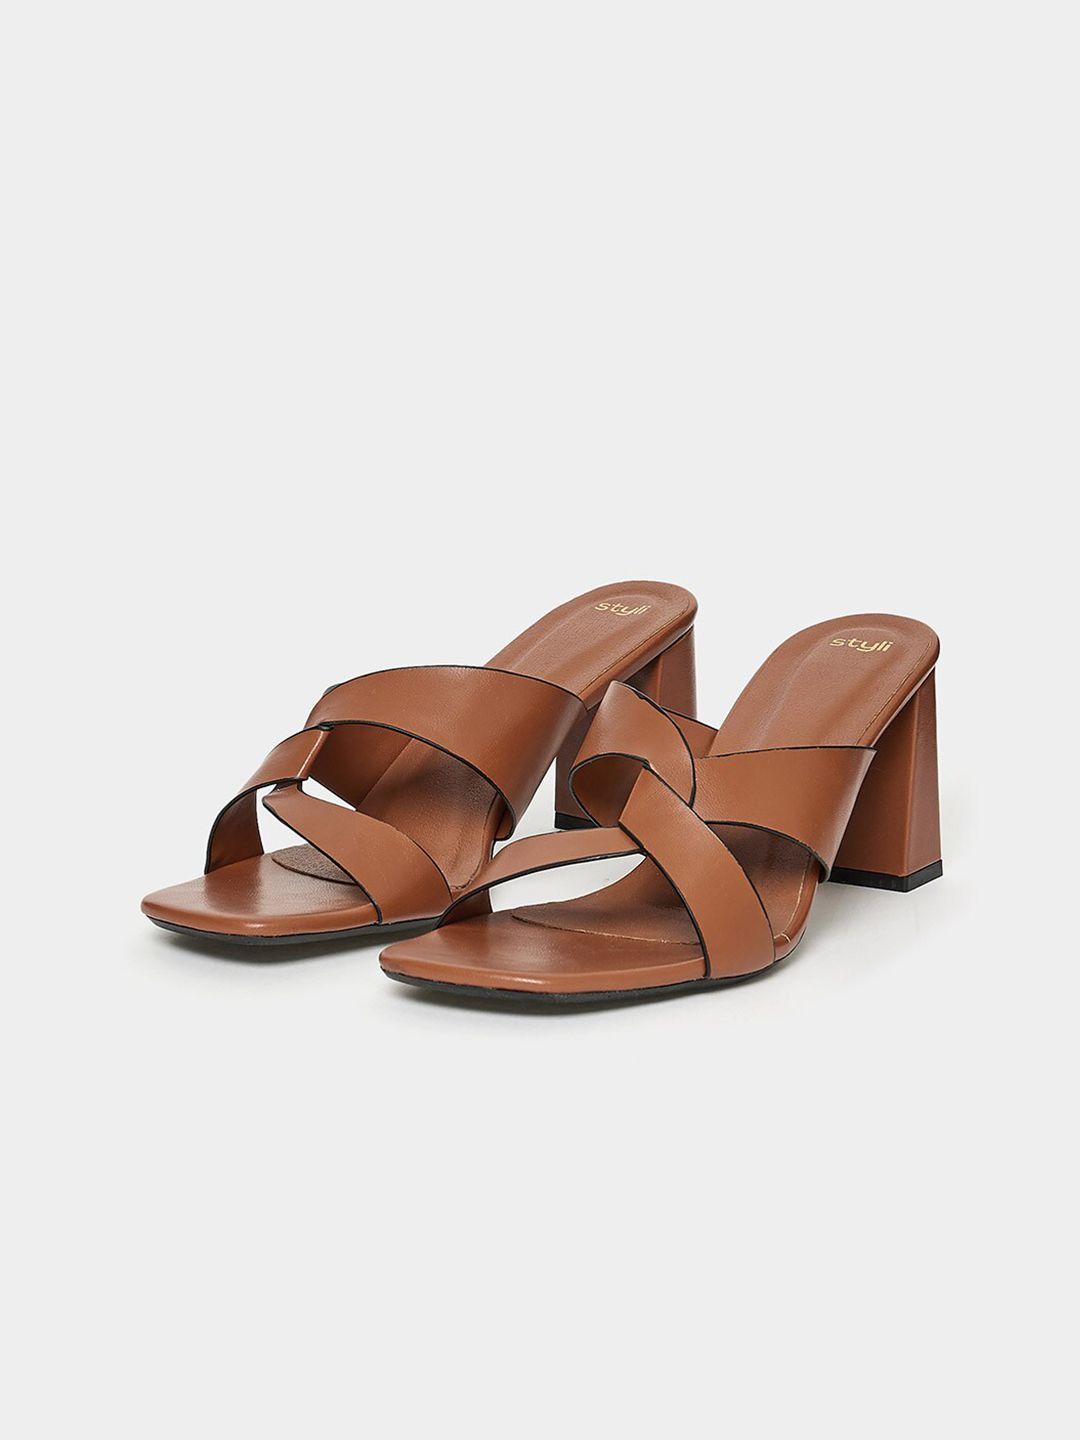 styli tan brown twisted strap block heels